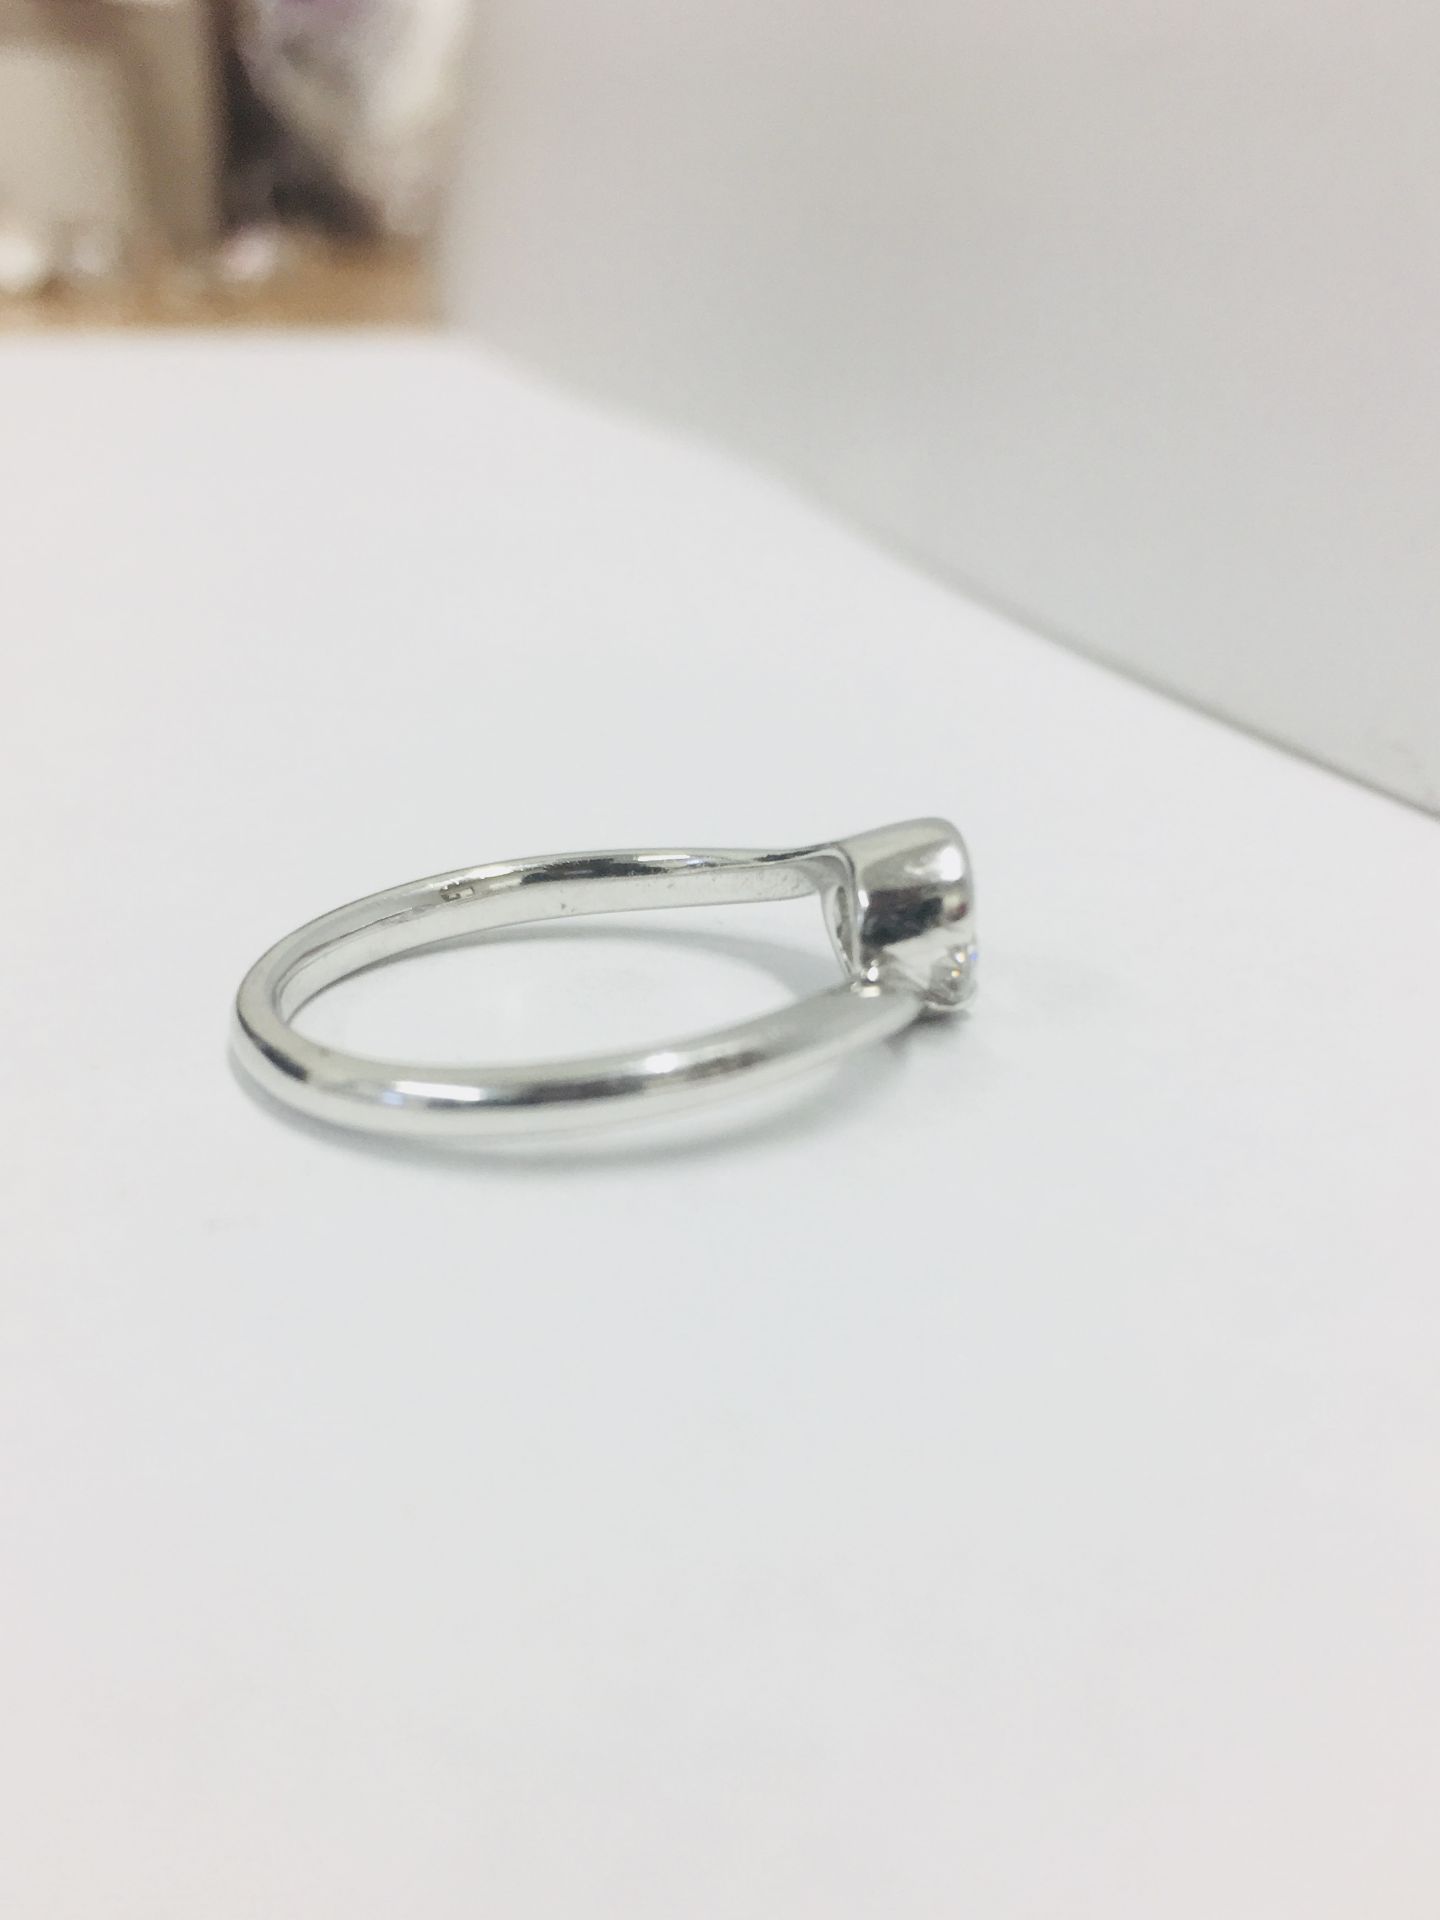 Platinum twist style diamond solitaire ring,0.50ct D colour vs clarity diamond,4.68gms platinum,uk - Image 5 of 7